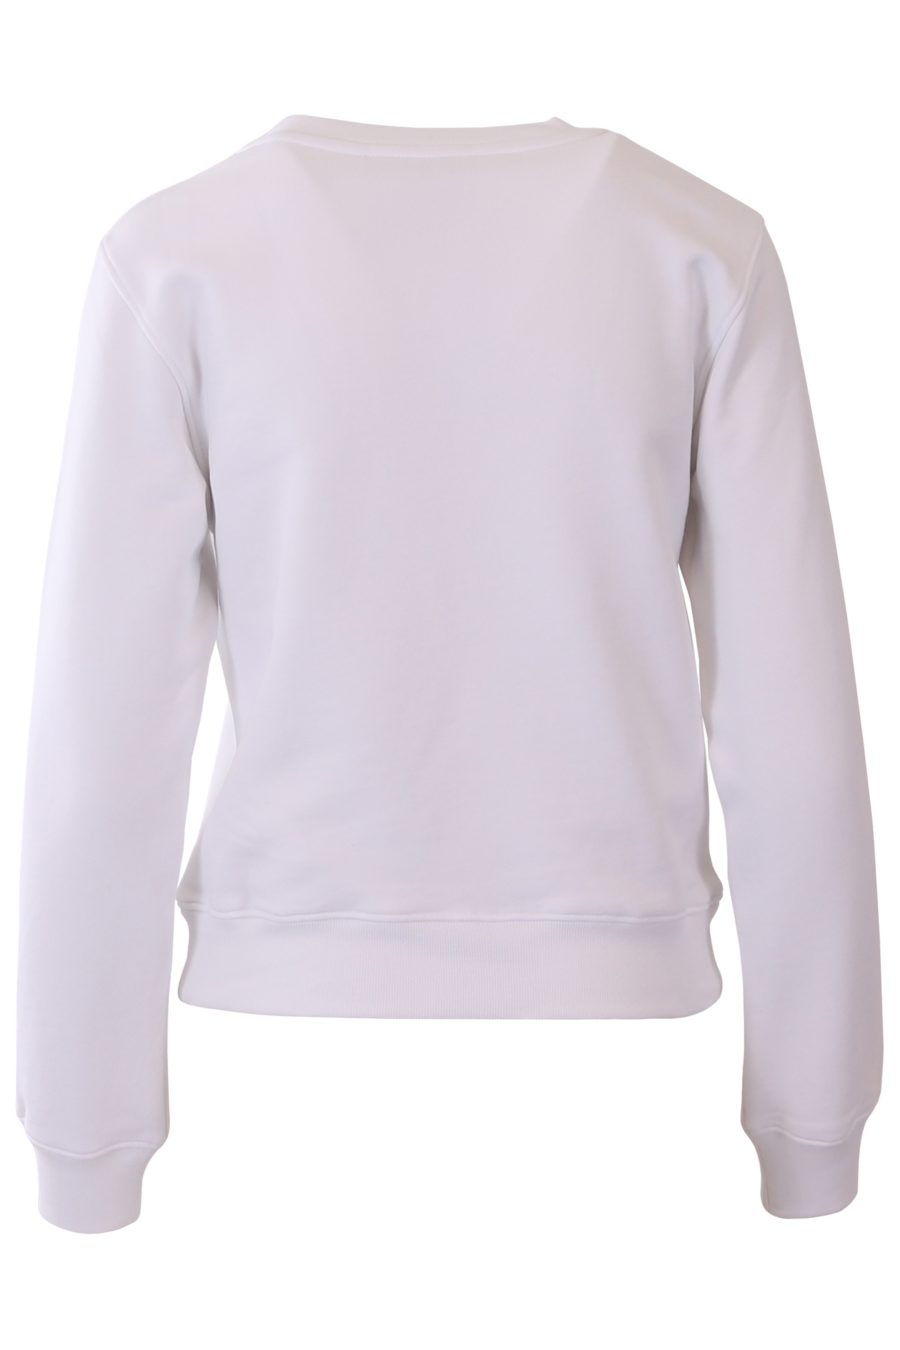 Moschino Couture camisola branca com logótipo grande - 0d0a3496e76eacfa9f449c69d07e31507bf6f538